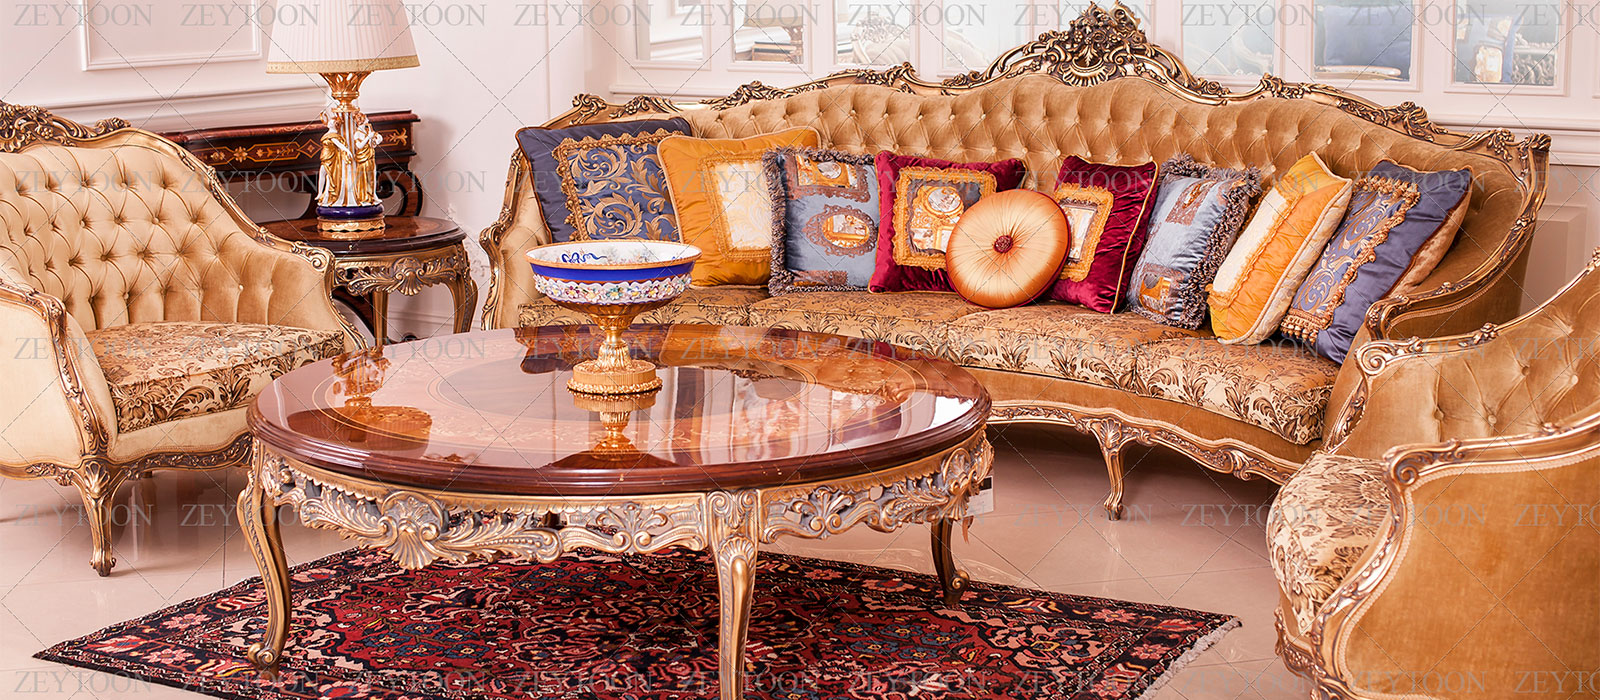 Luxe classic furniture